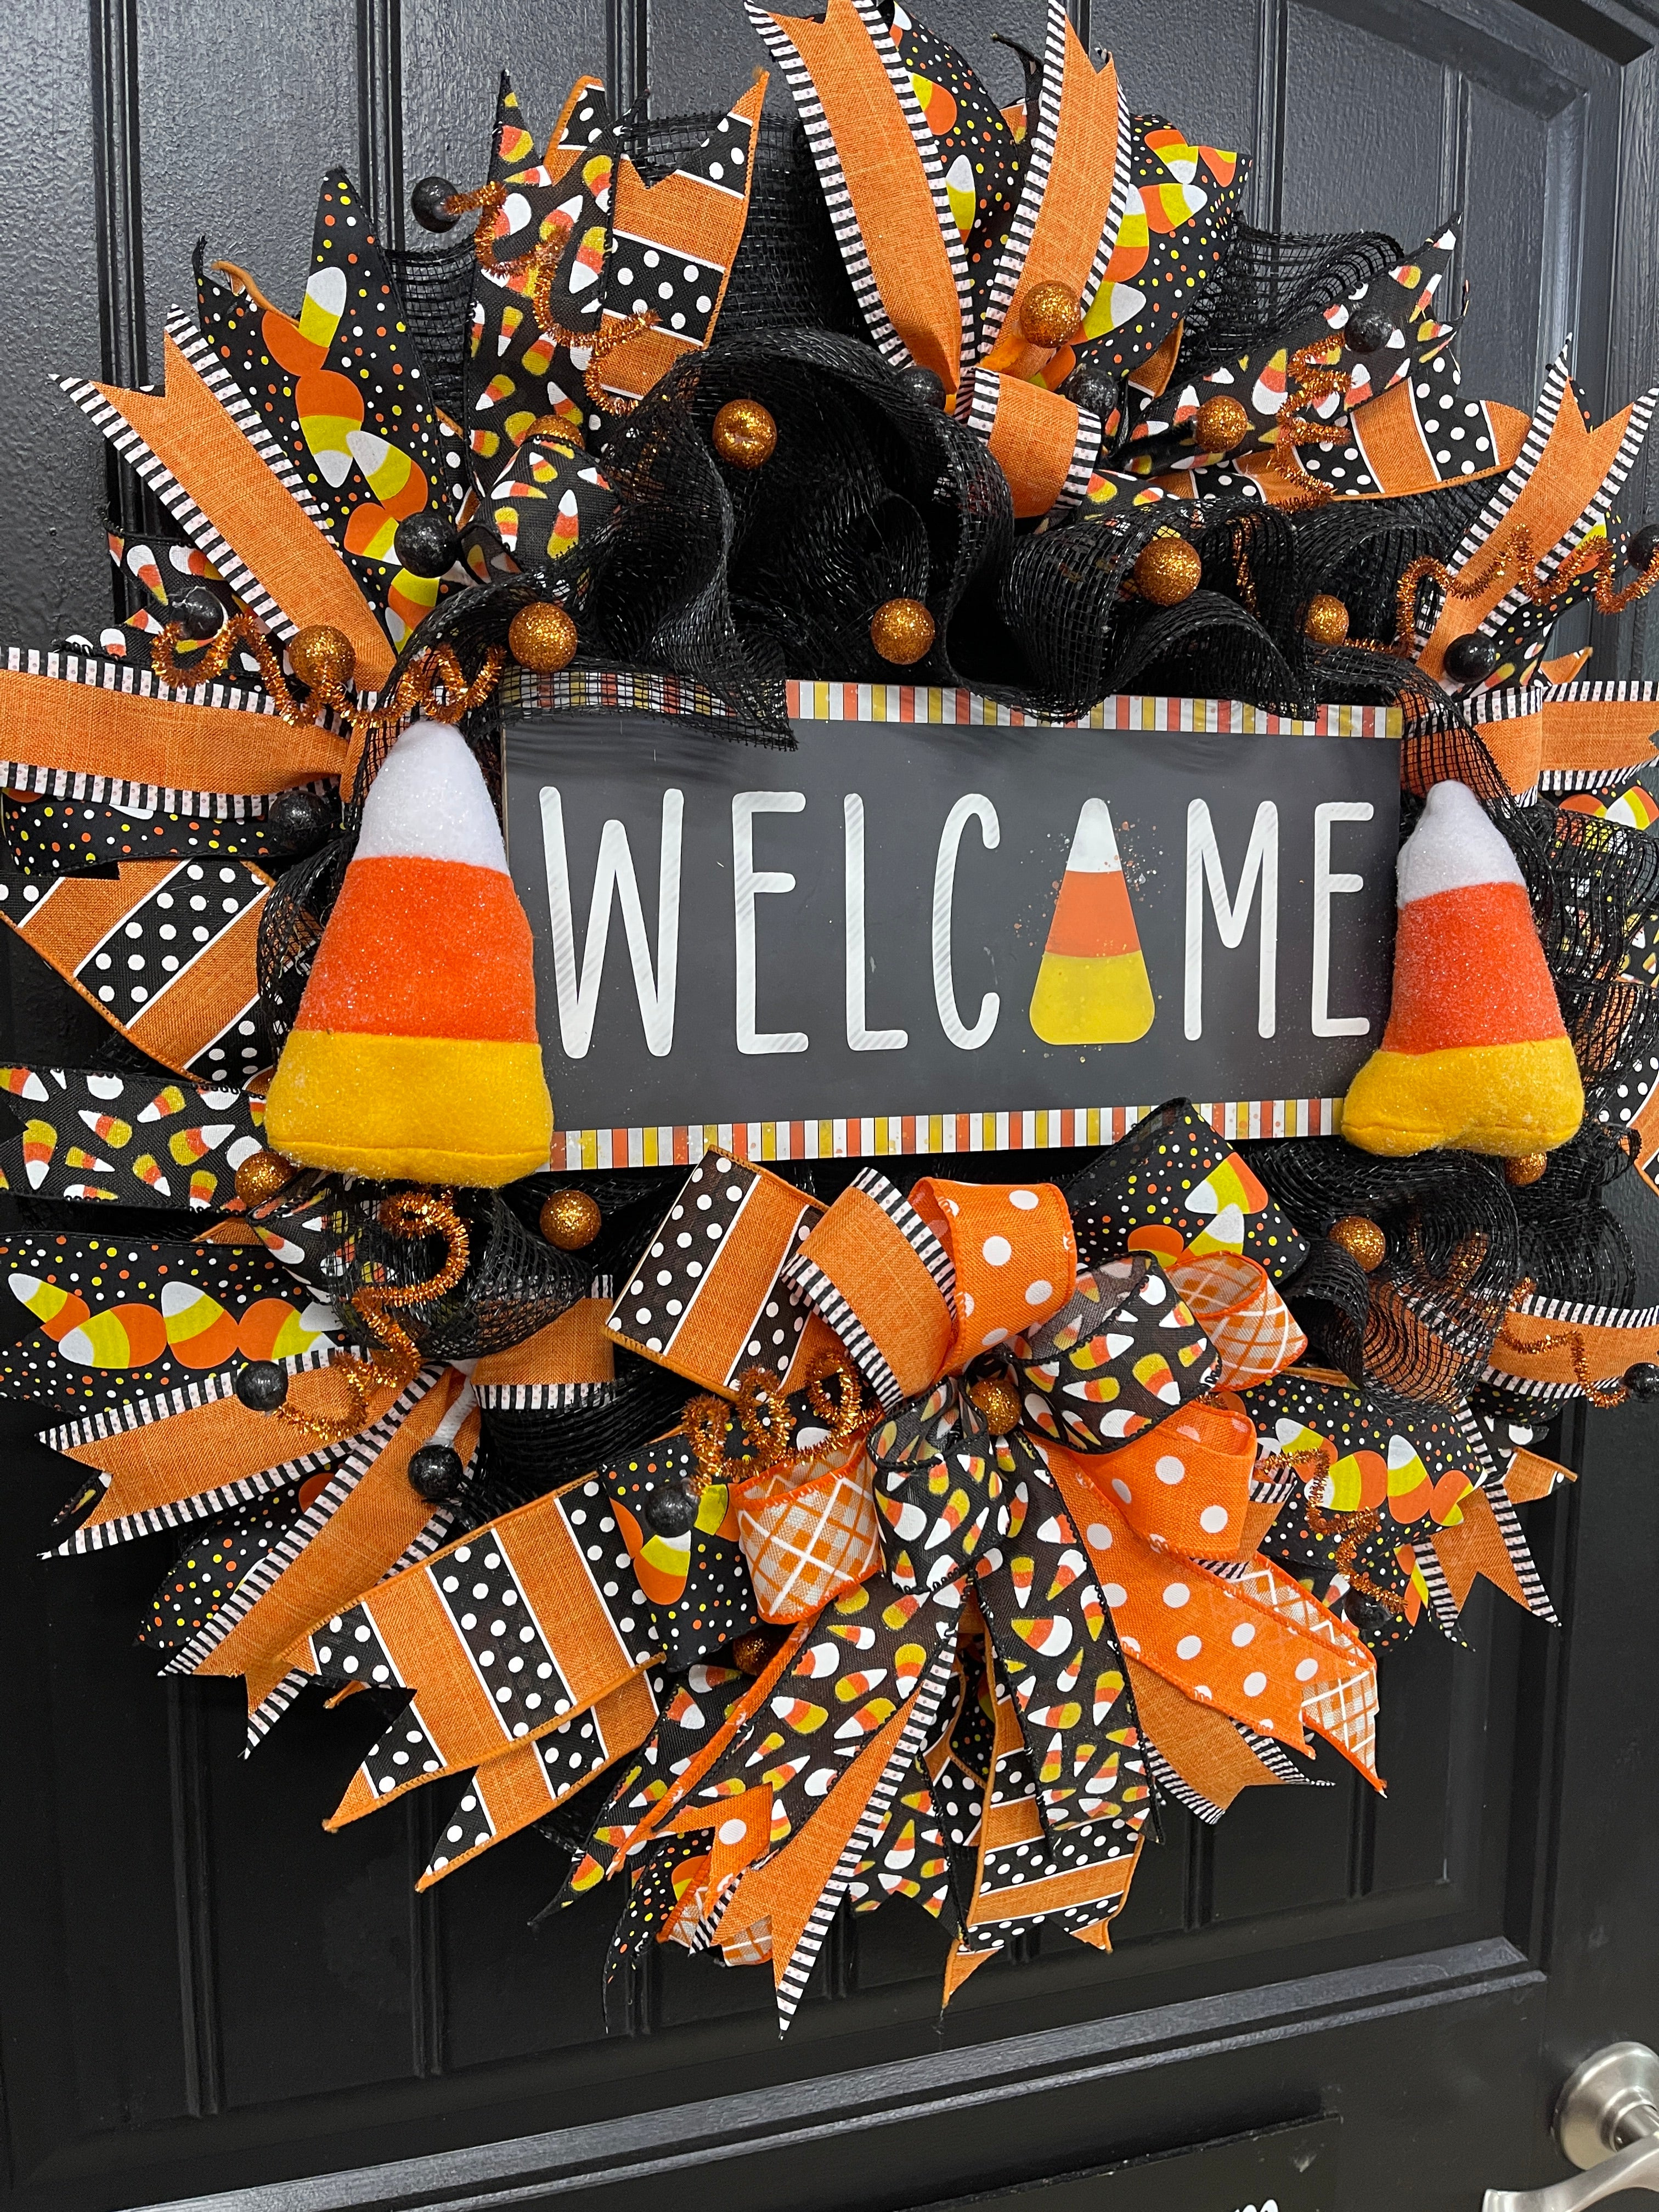 Candy Corn Welcome Wreath for Halloween, KatsCreationsNMore